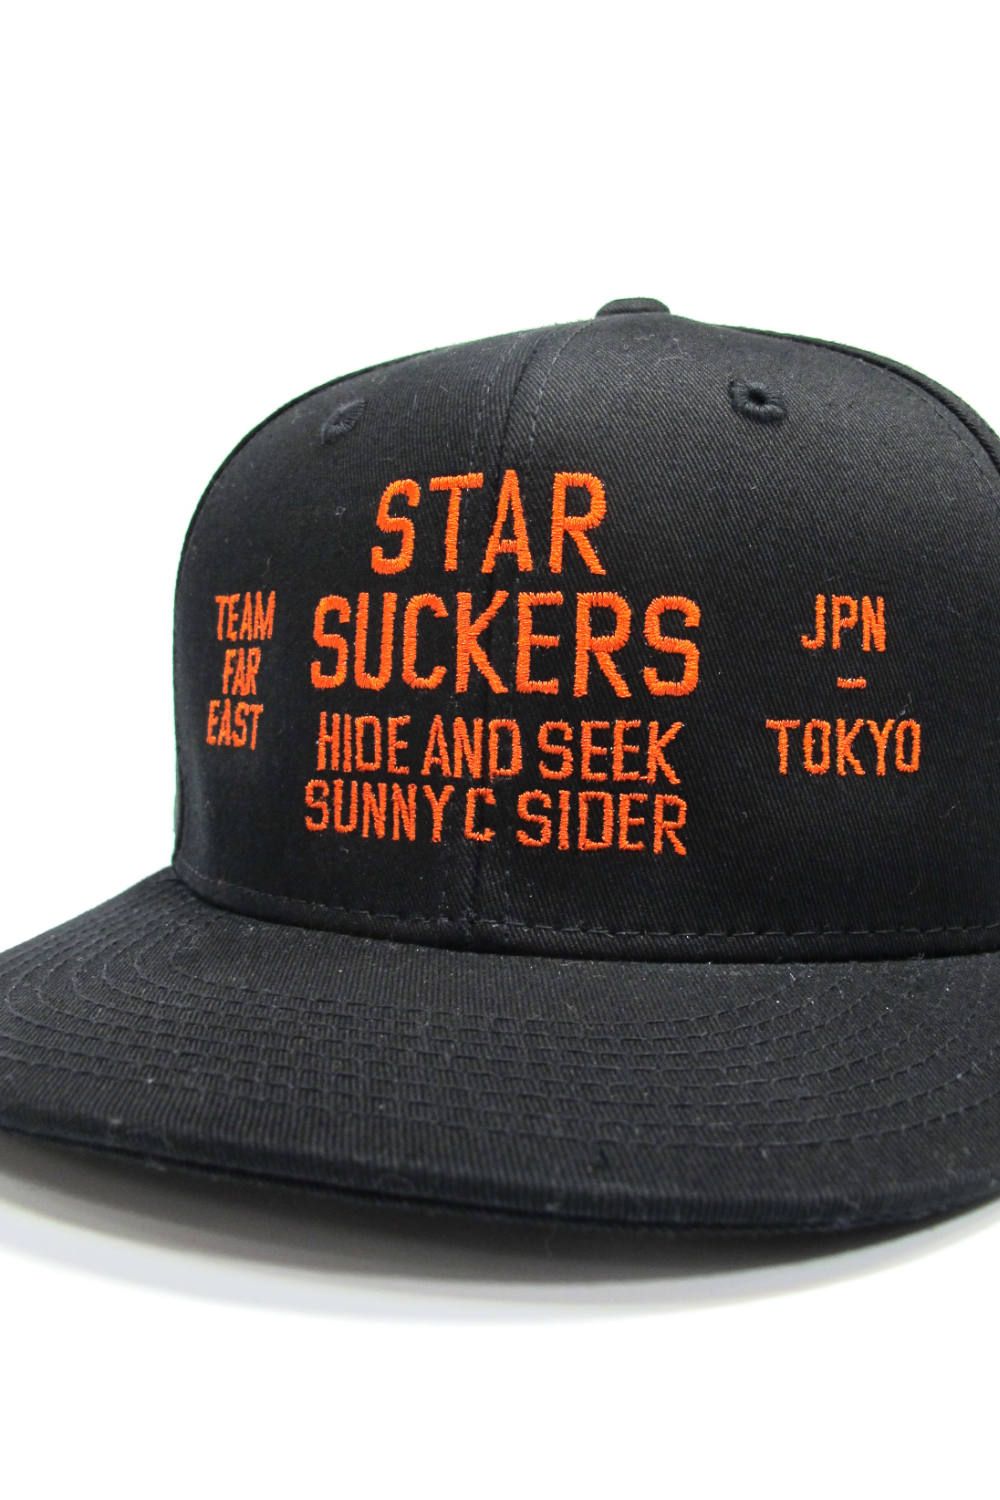 HIDE AND SEEK - × SUNNY C SIDER BASEBALL CAP (BLACK×BLUE) / サニー